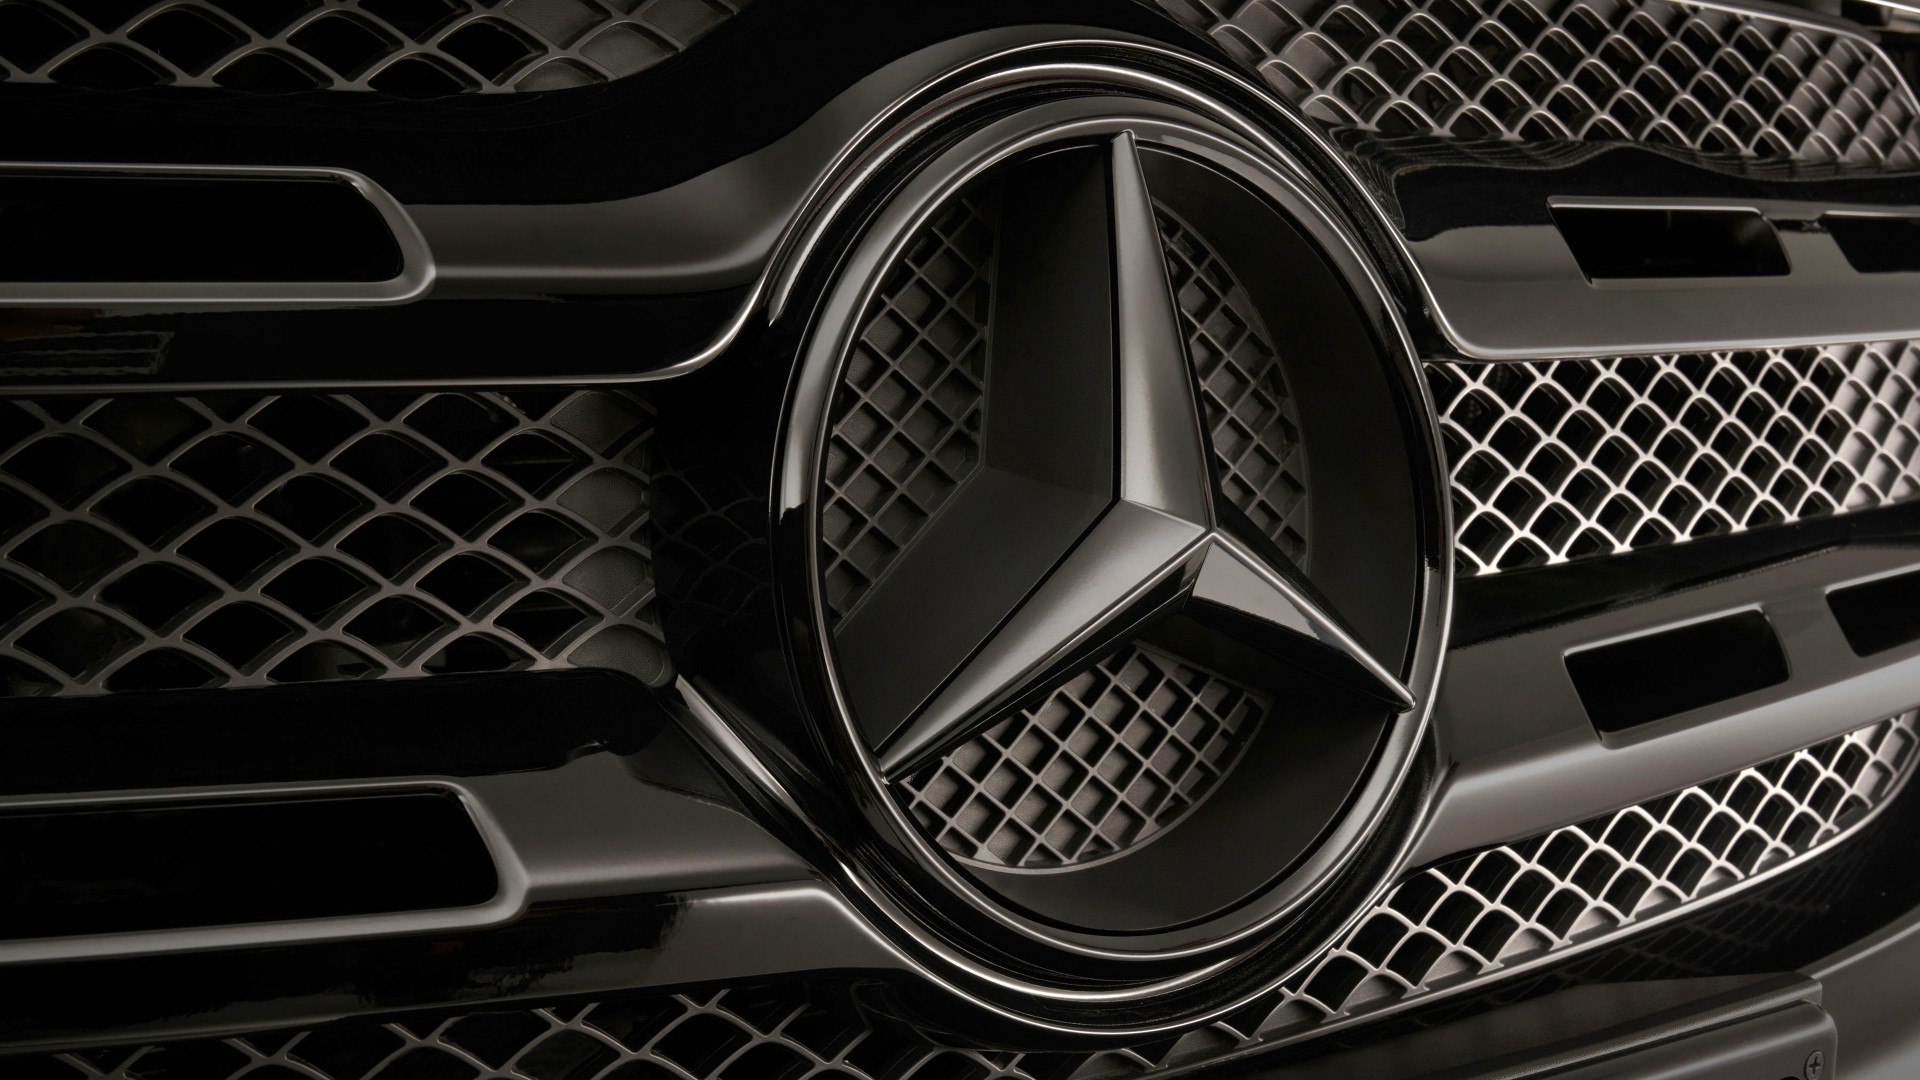 Mercedes-benz X 350 D 4matic, Logo, Front View - Seoul - HD Wallpaper 